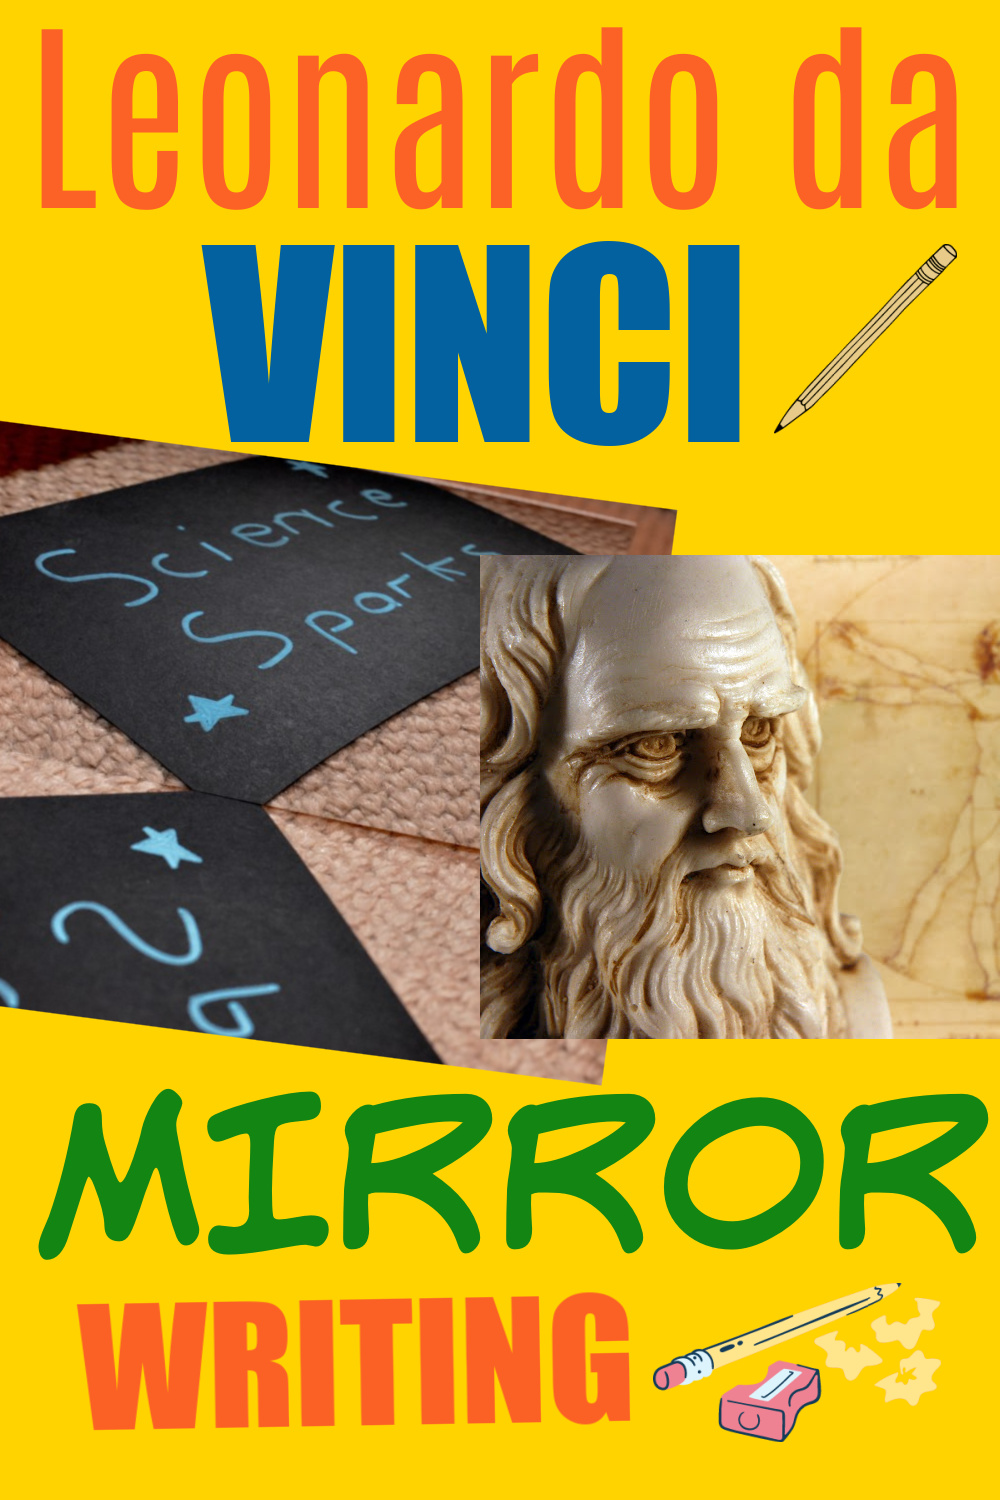 Leonardo da Vinci Mirror Writing. Image of Leonardo da Vinci and backwards writing using a mirror